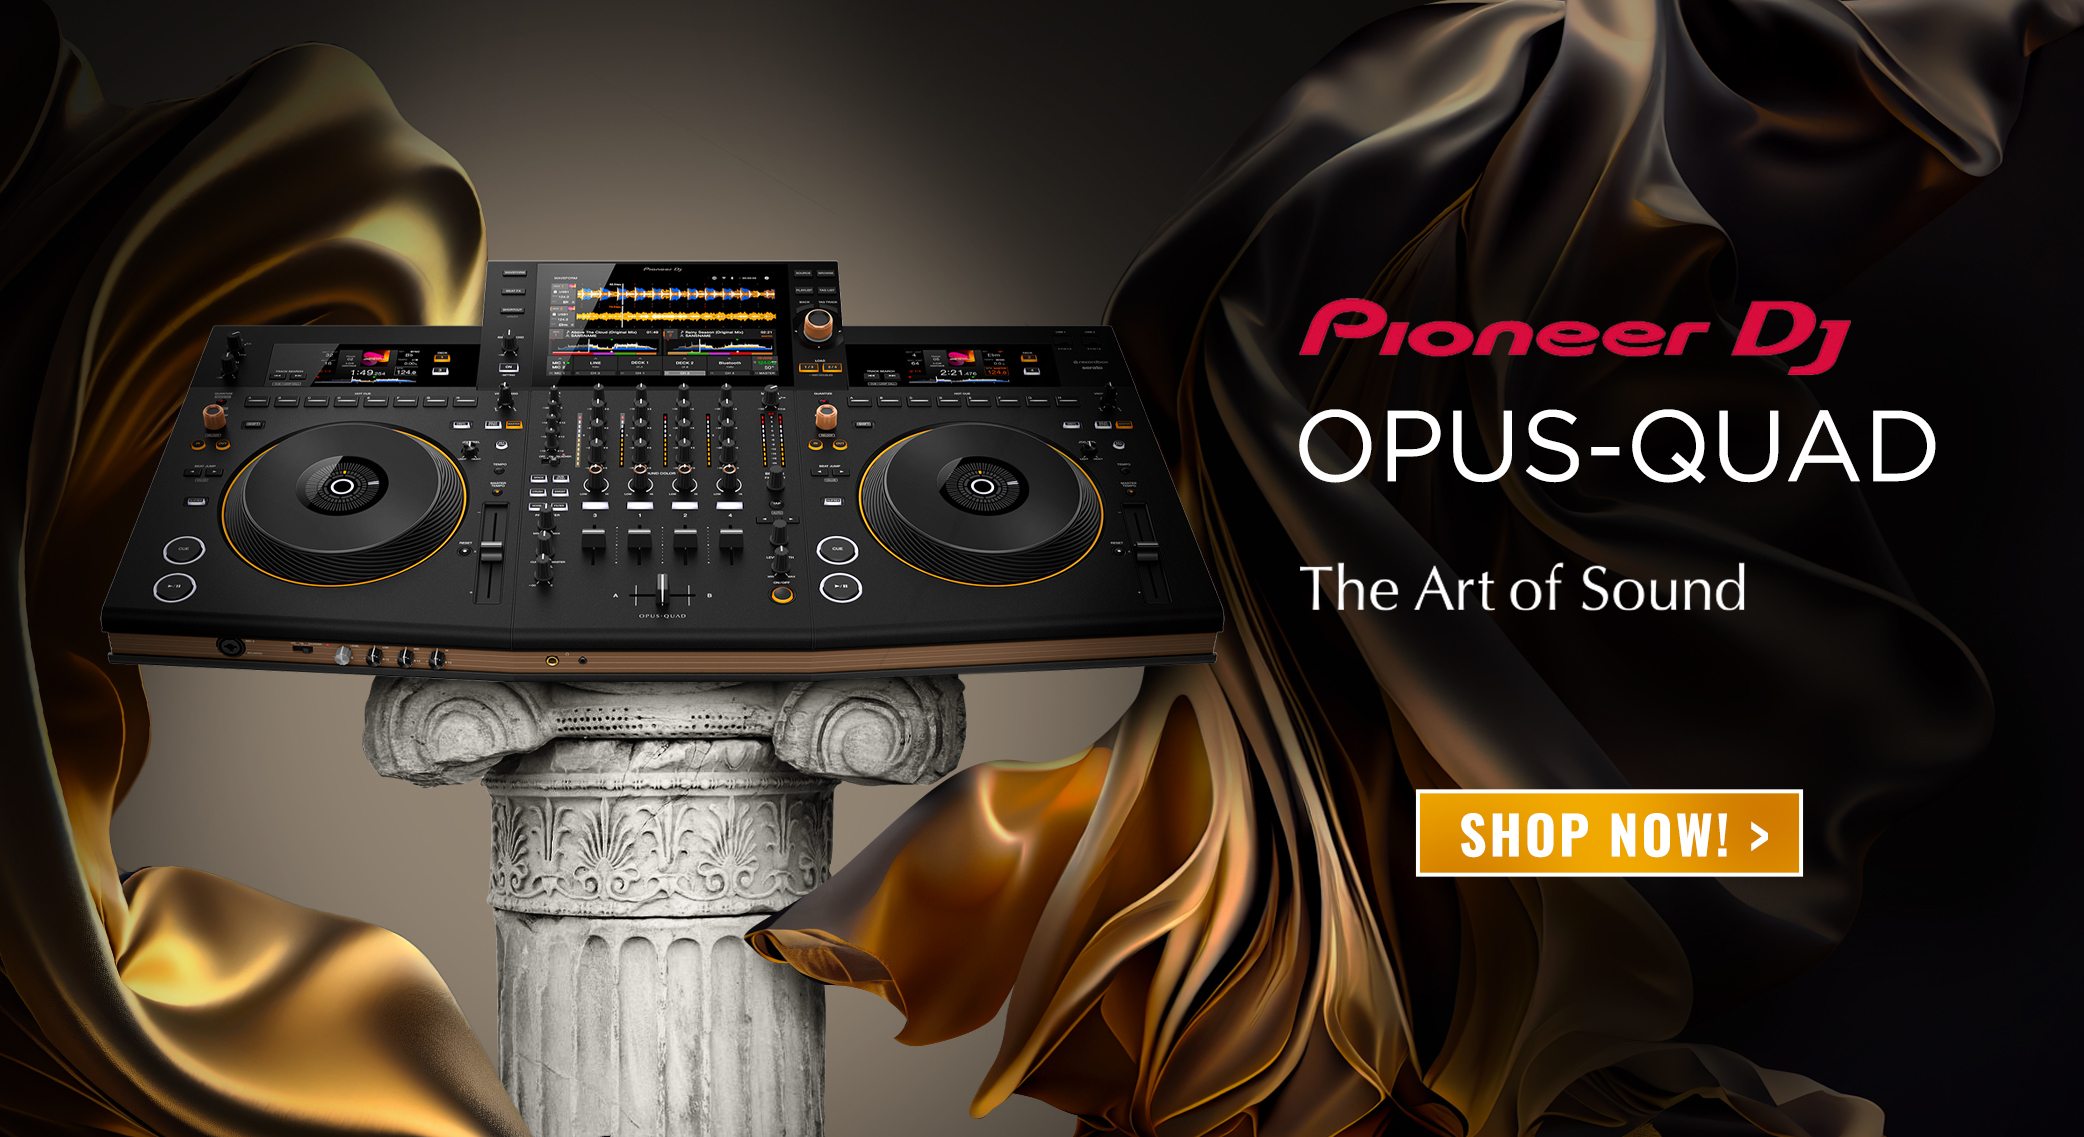 New Arrivals at ProAudioStar, Pioneer DJ OPUS QUAD